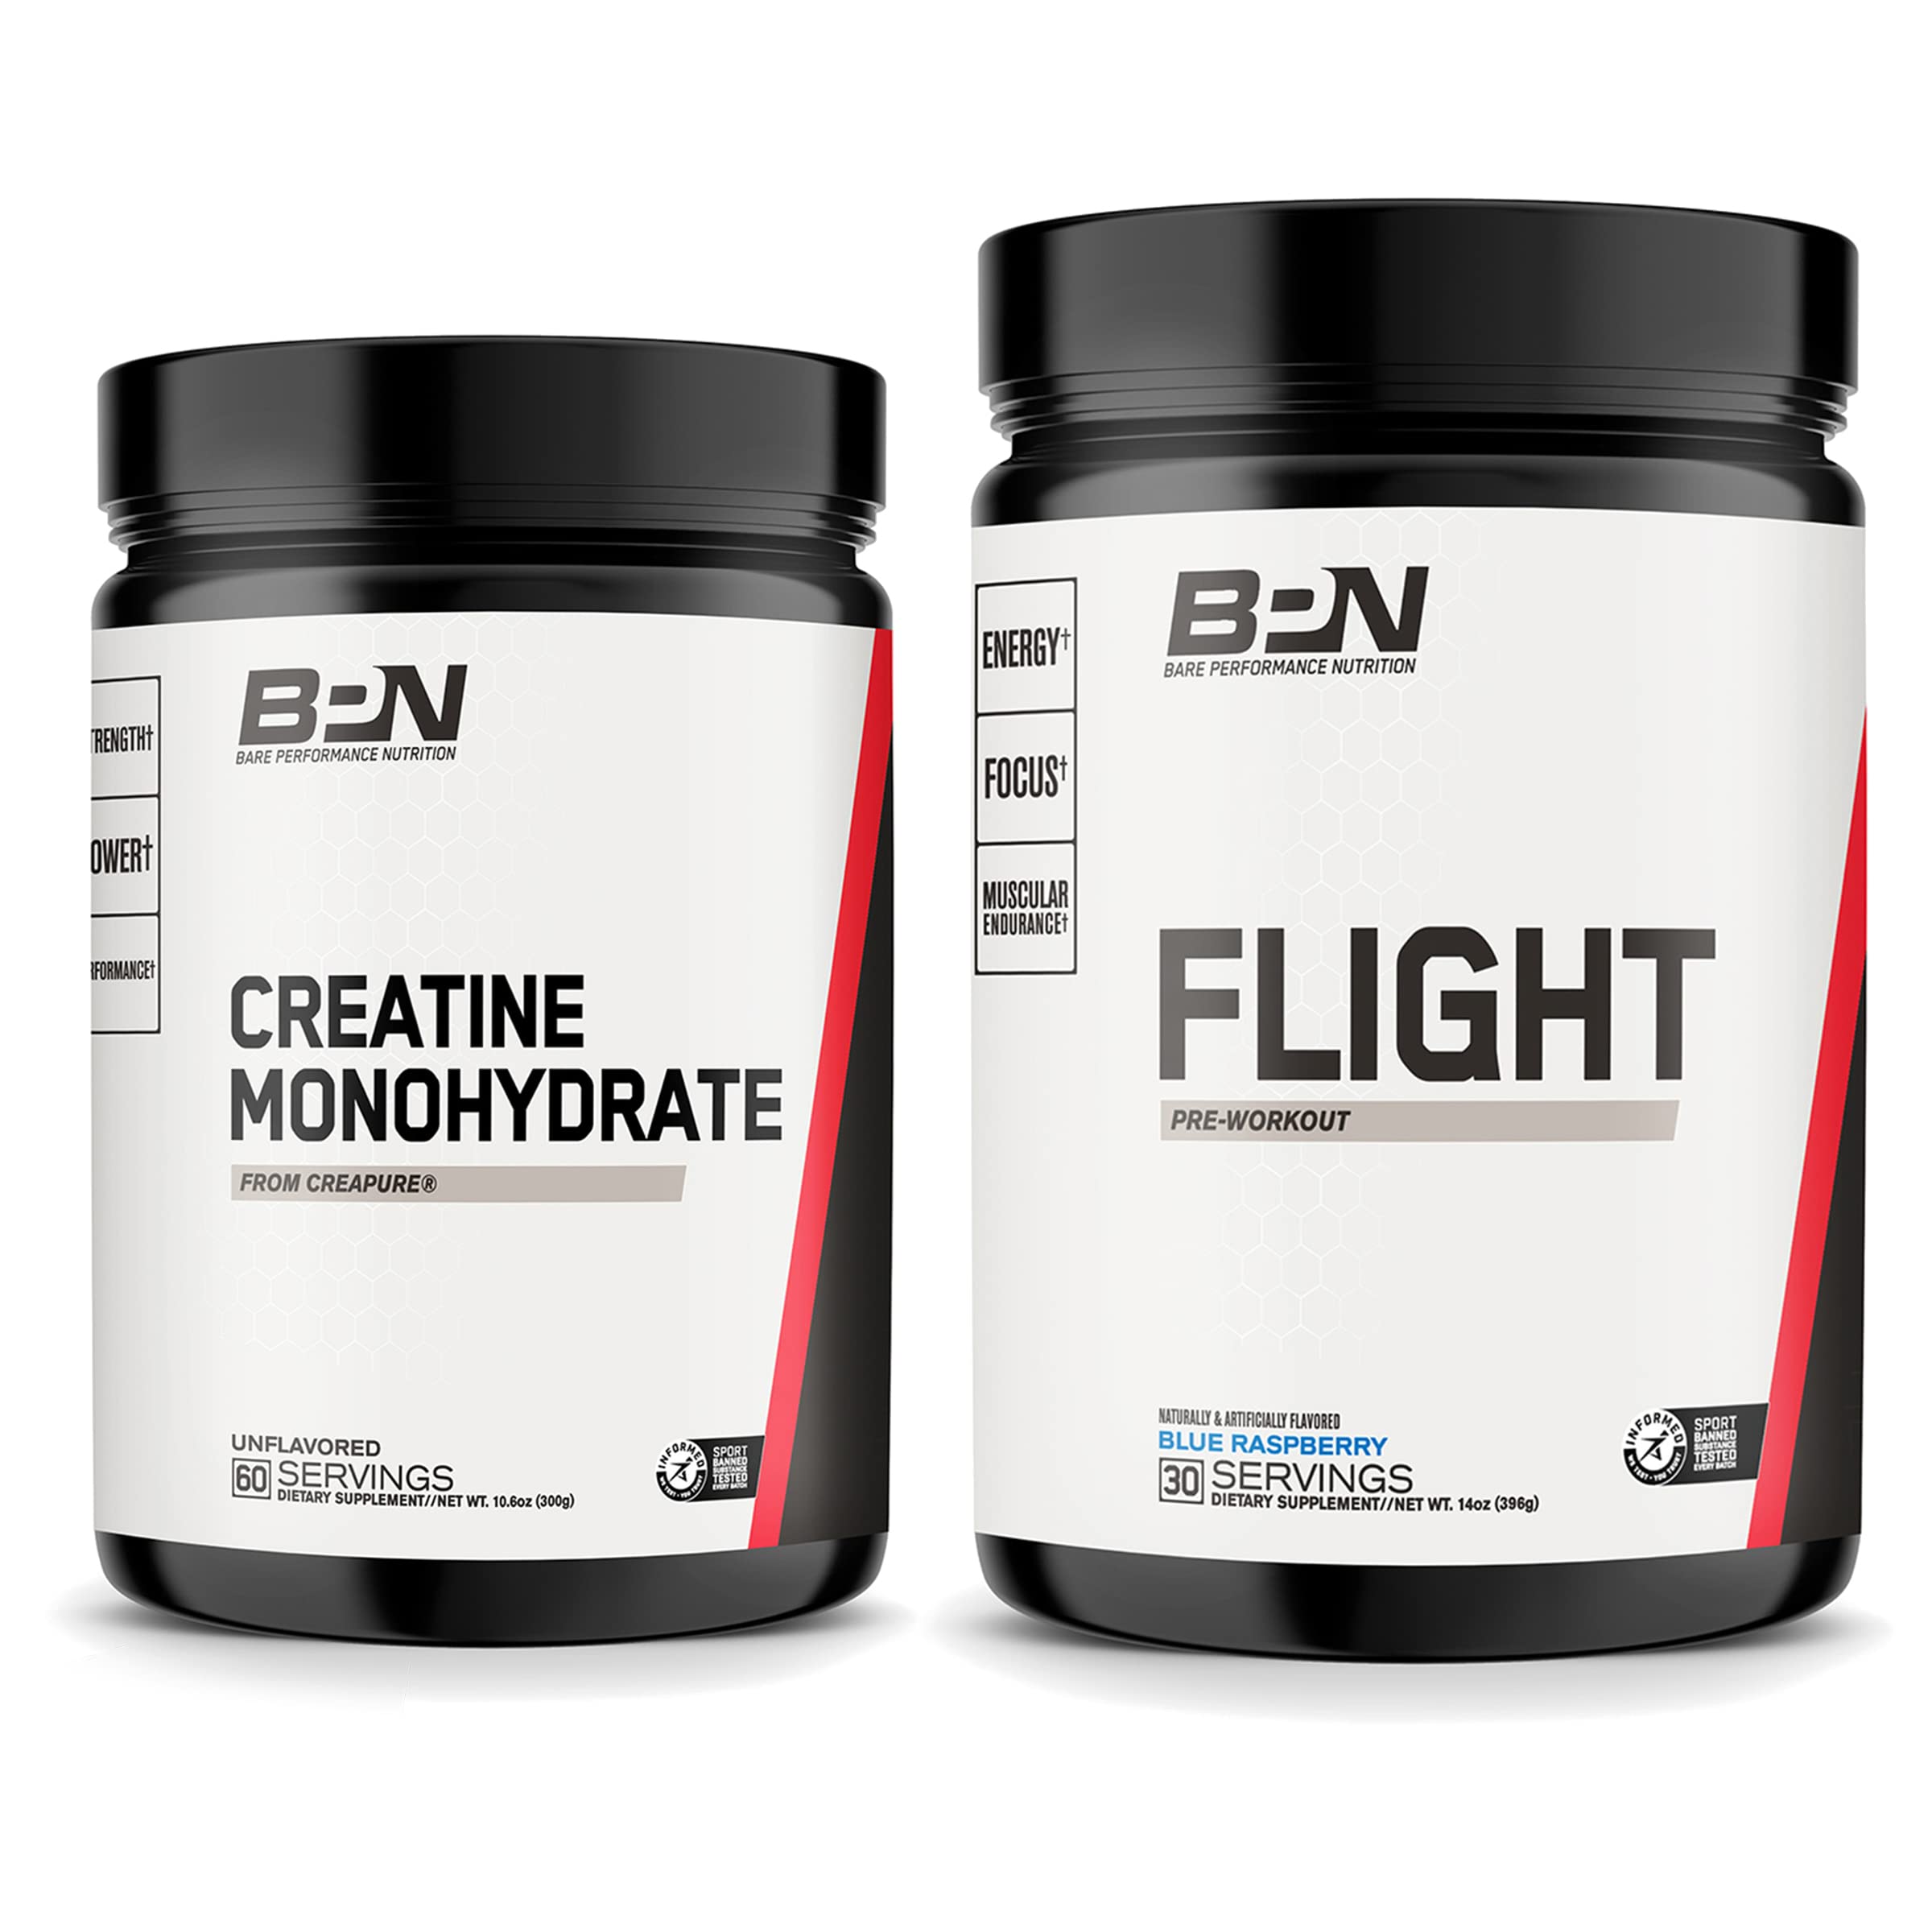 BARE PERFORMANCE NUTRITION, BPN Creatine Monohydrate (Unflavored) & Flight Pre Workout (Blue Raspberry) Bundle